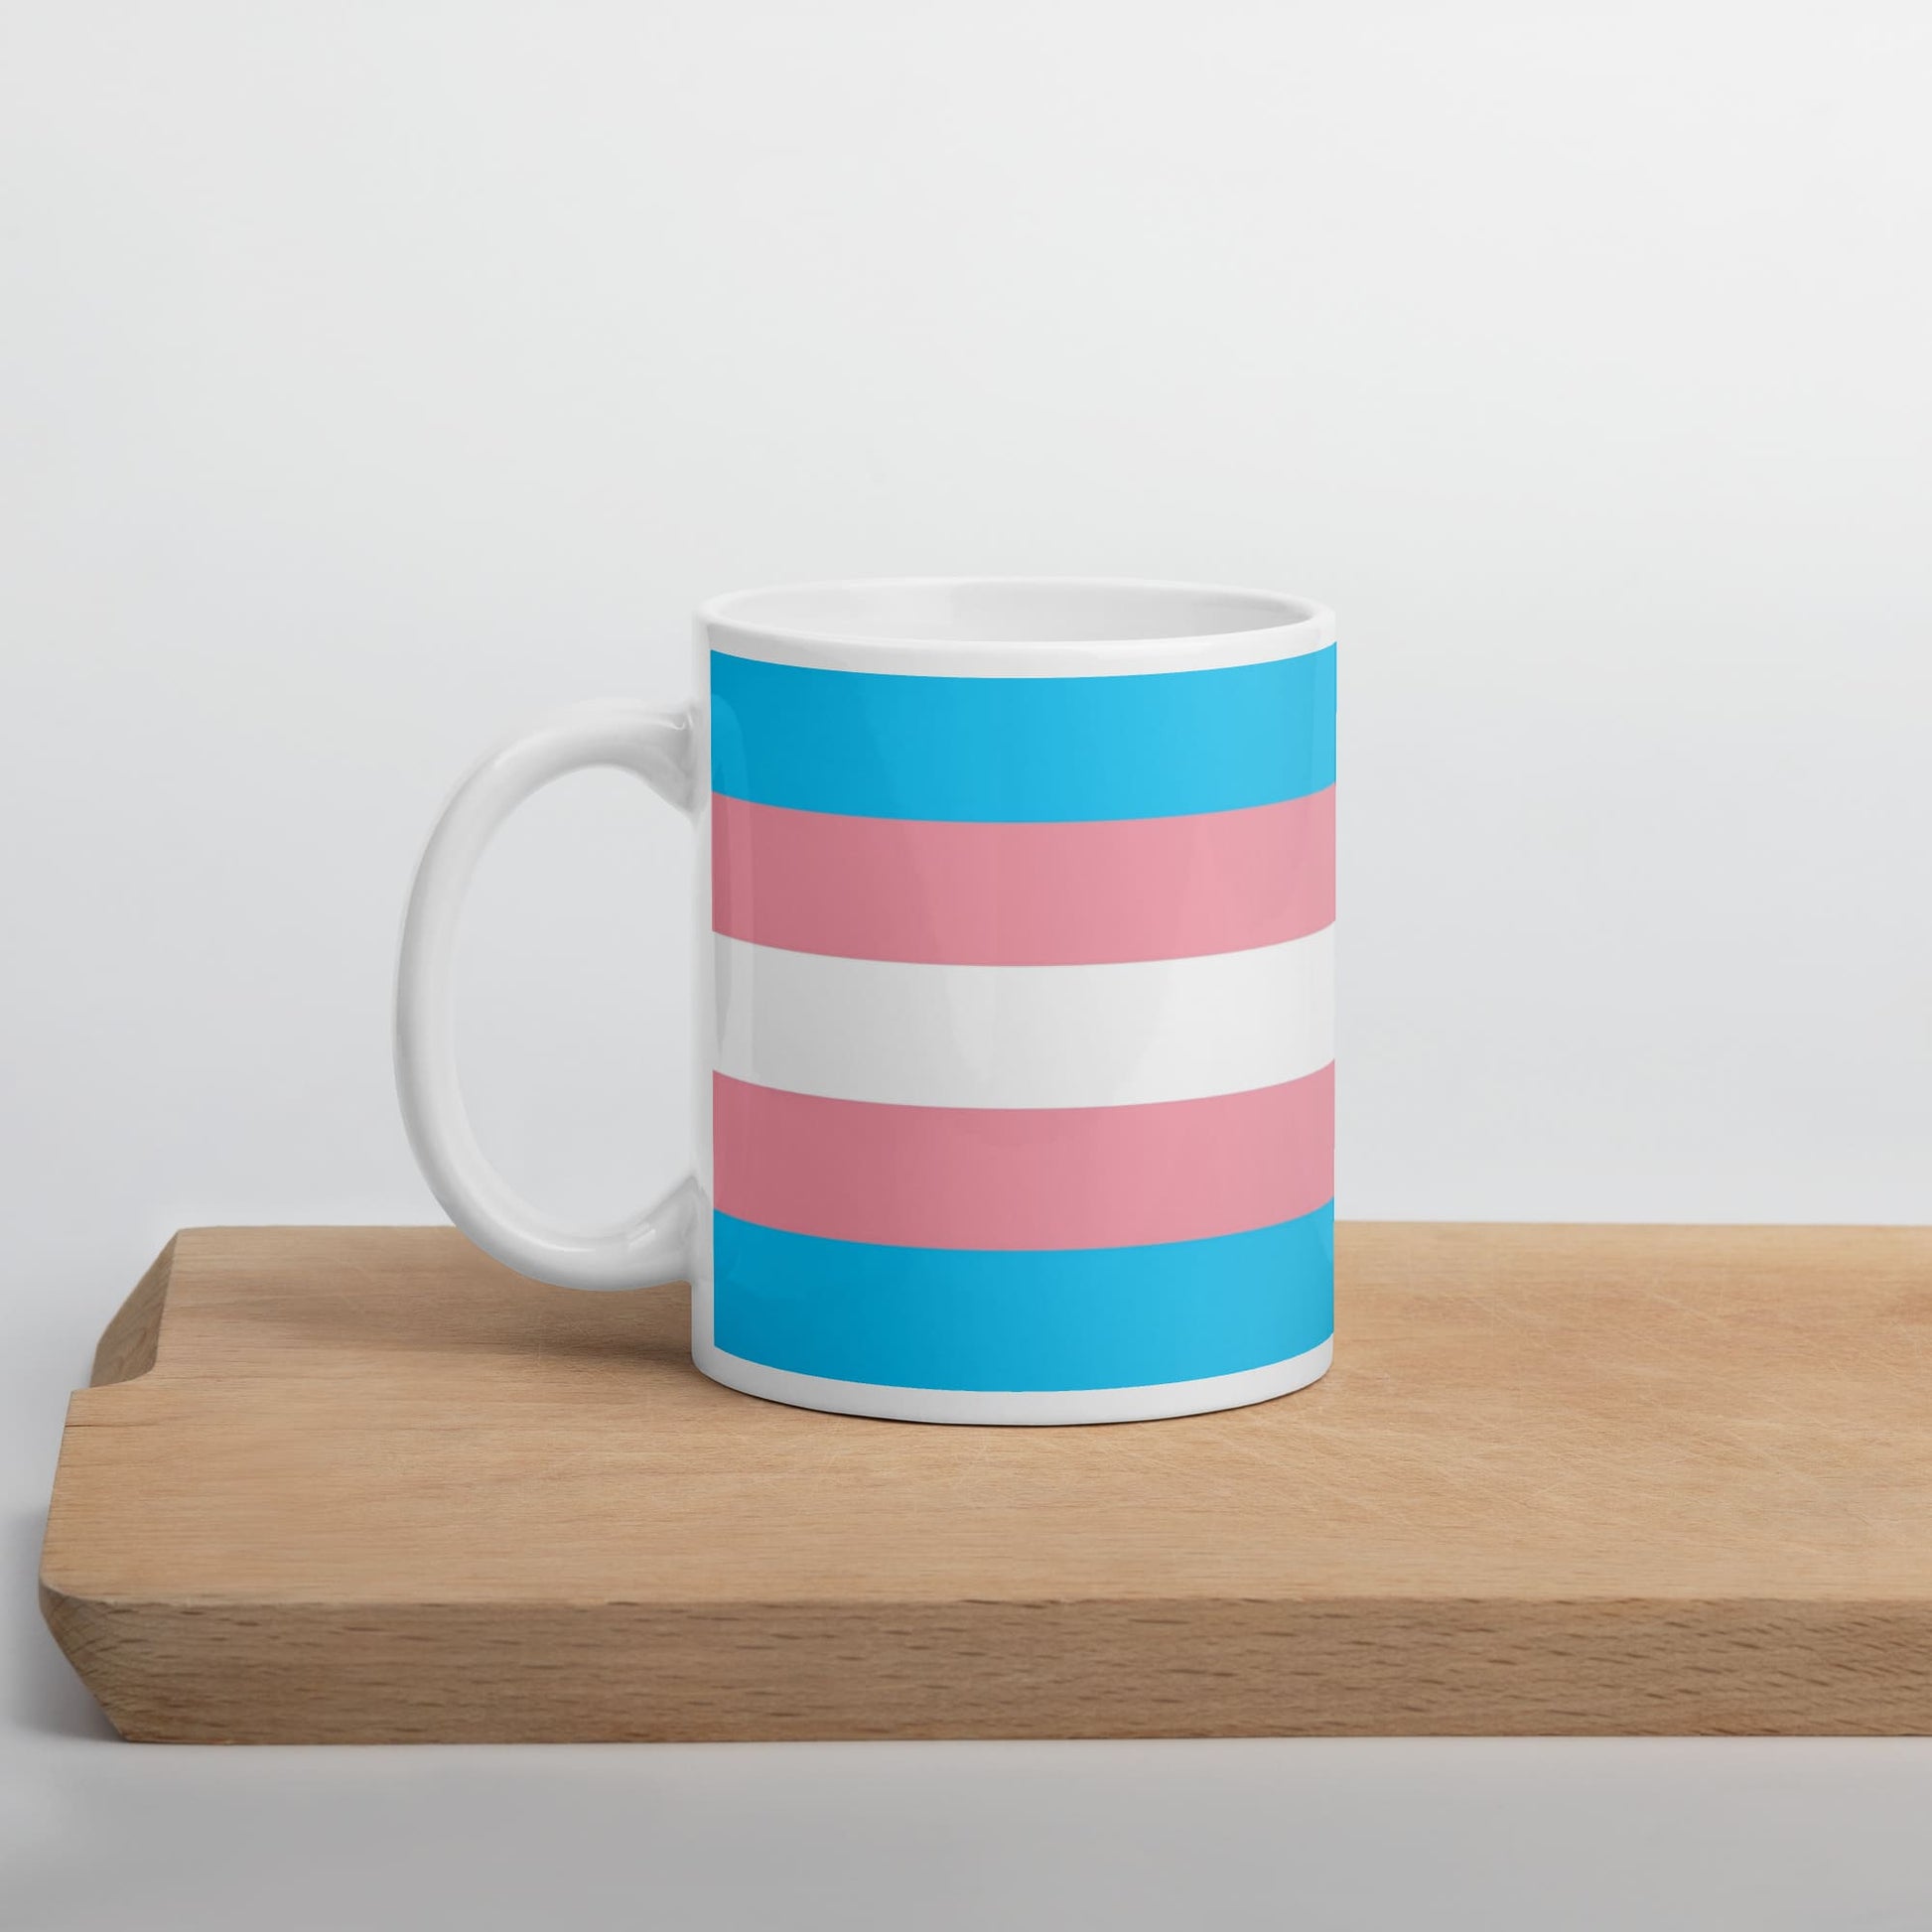 transgender coffee mug on table